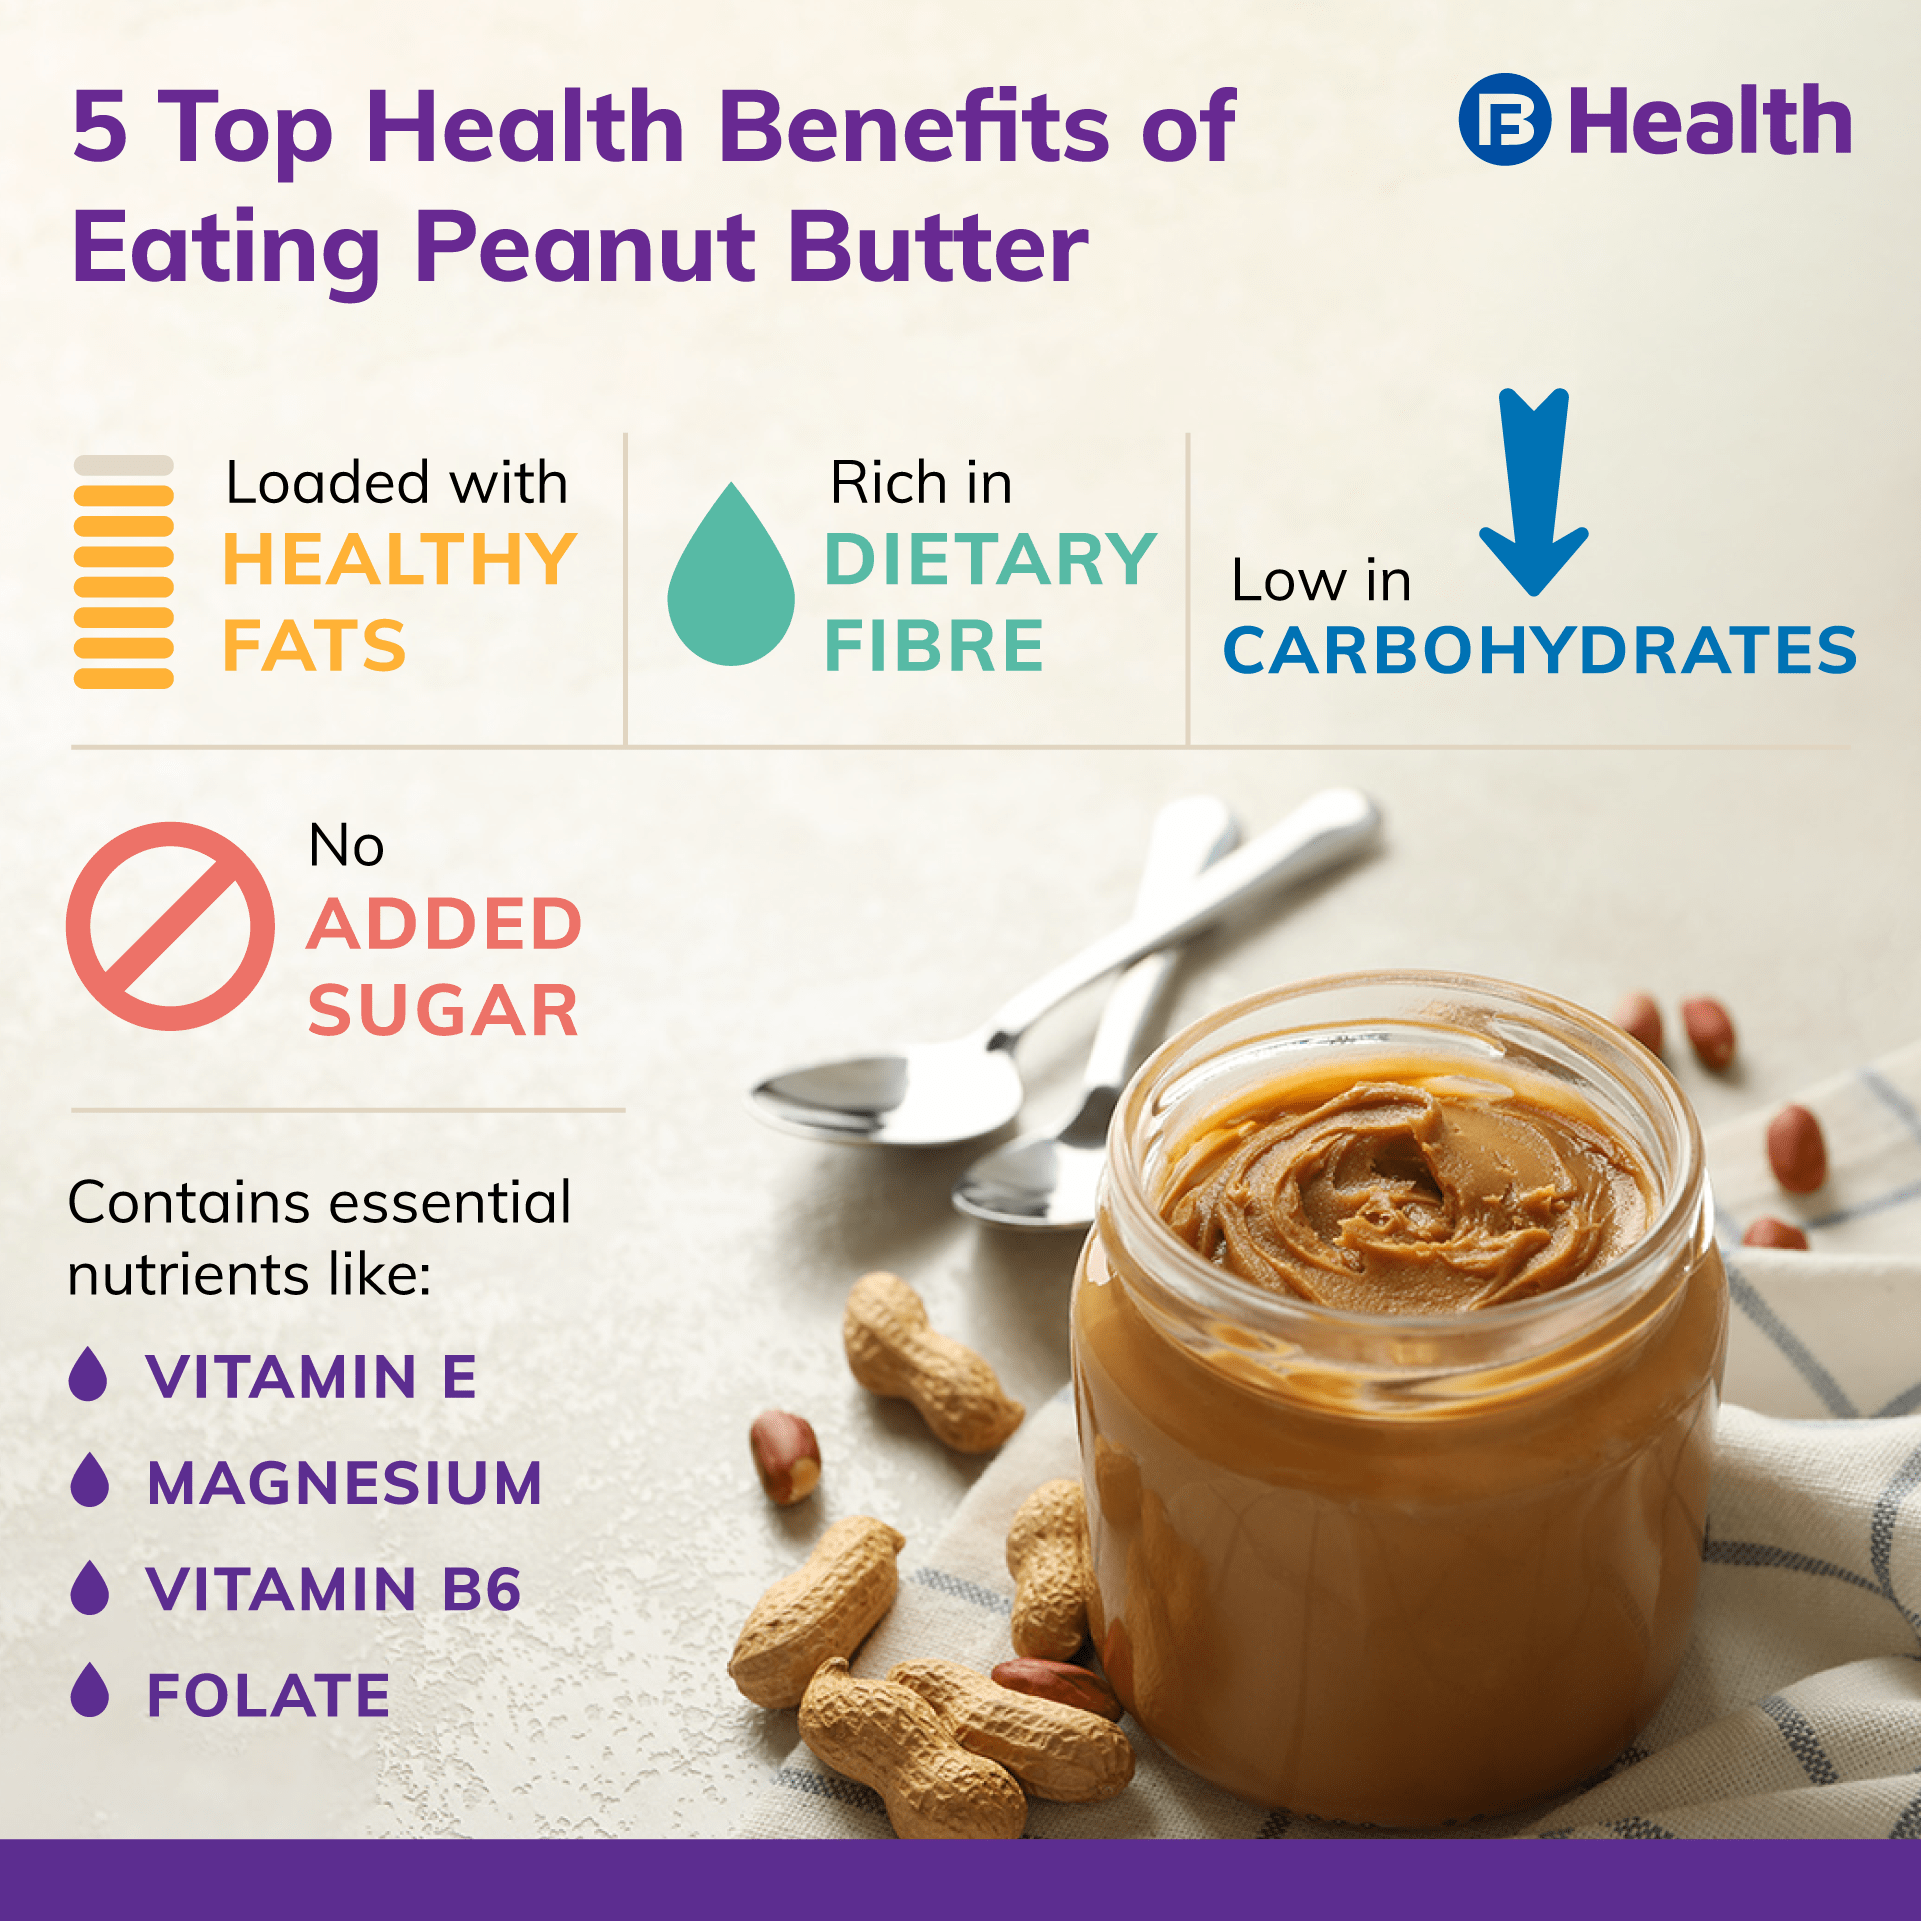 Health benefits of peanut butter